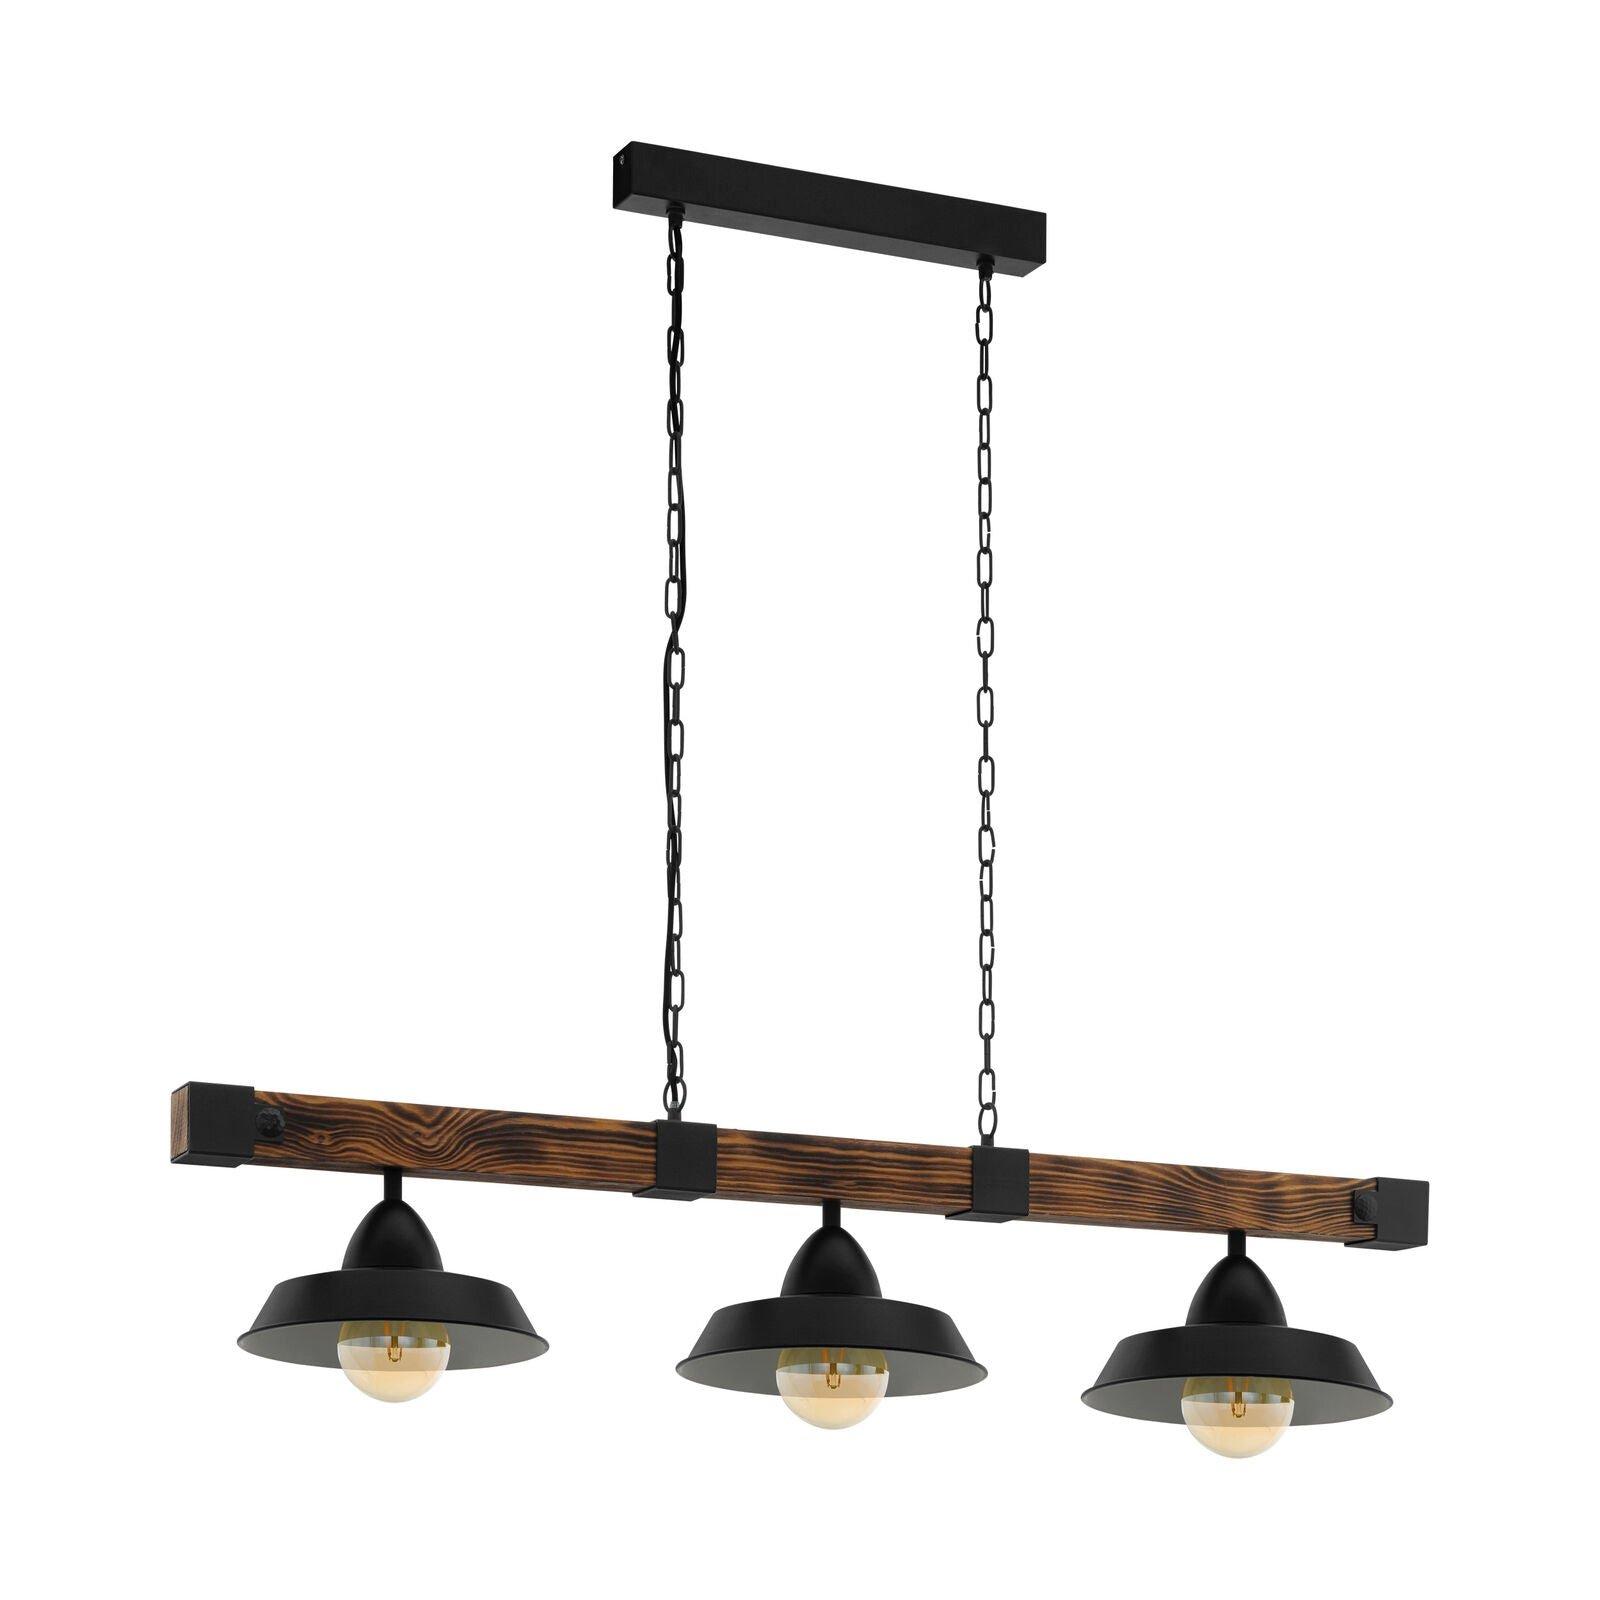 Hanging Ceiling Pendant Light Black & Rustic Wood 3 Bulb Kitchen Island Dining